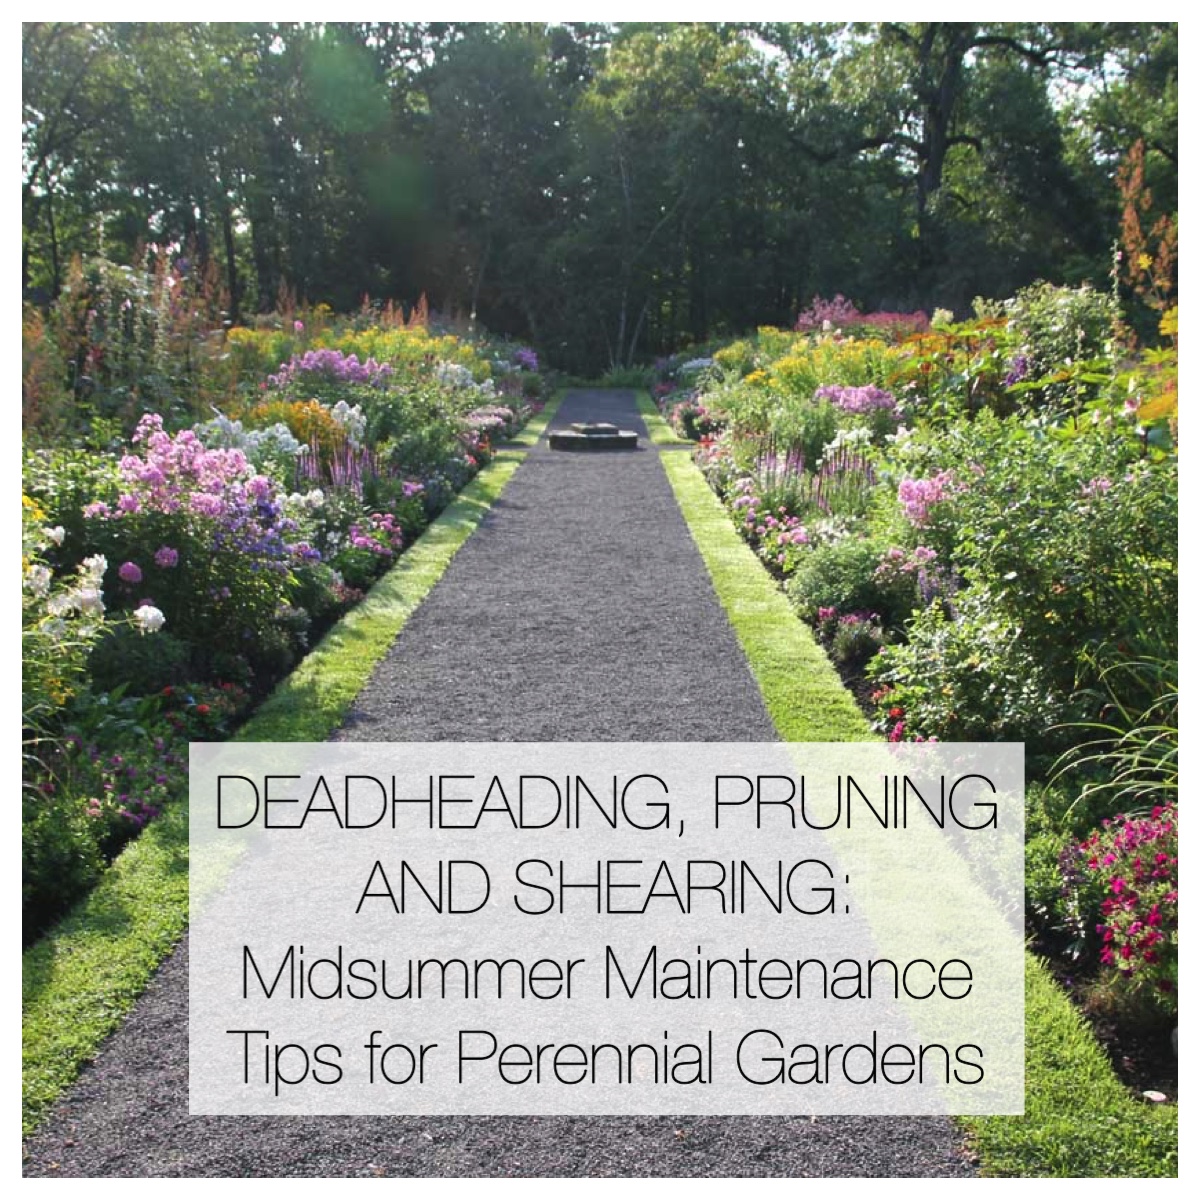 Midsummer Maintenance Tips for Perennial Gardens